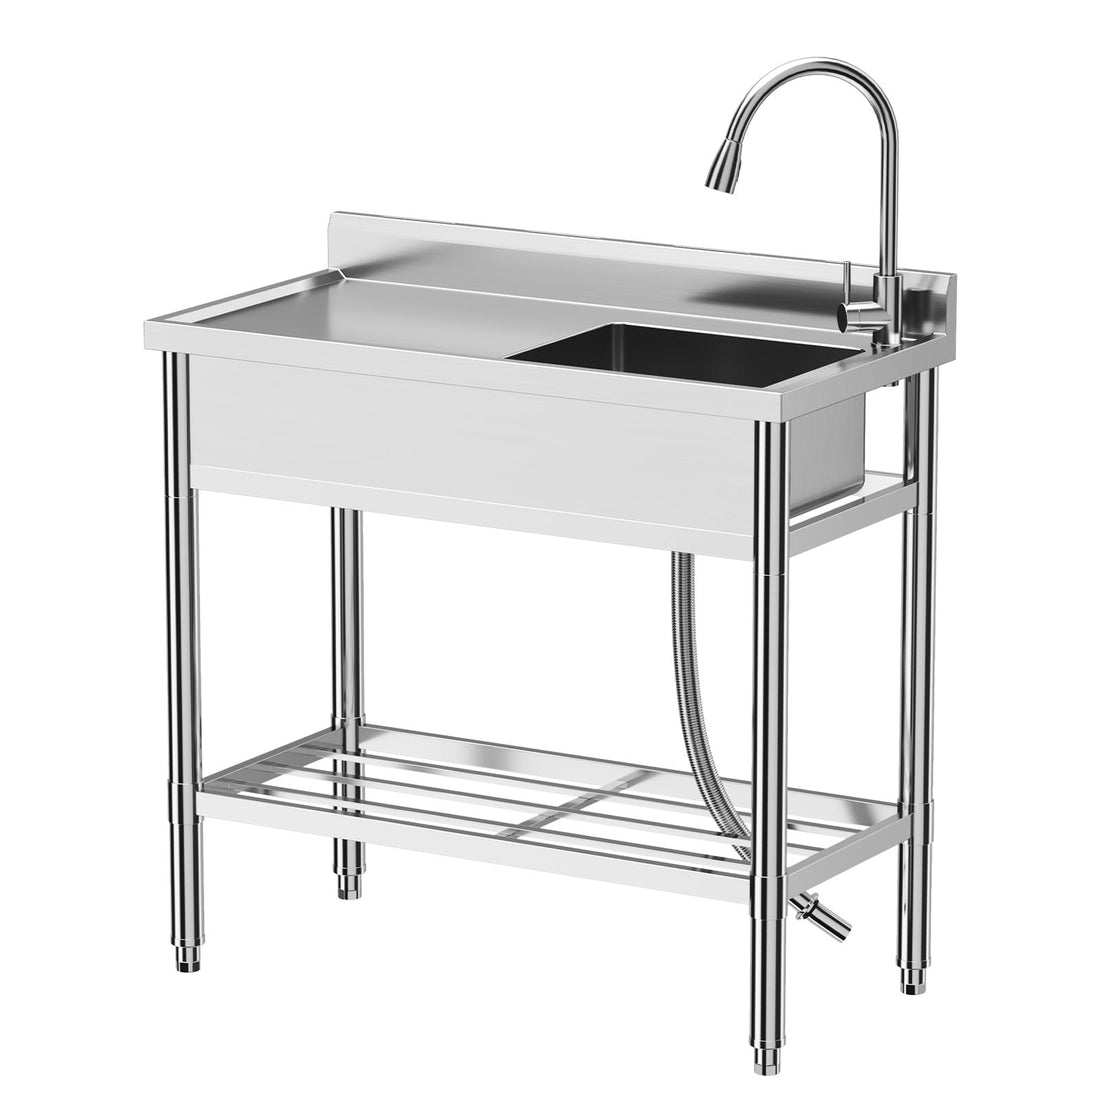 Stainless Steel Freestanding Sink,Faucet,Worktop for Restaurant